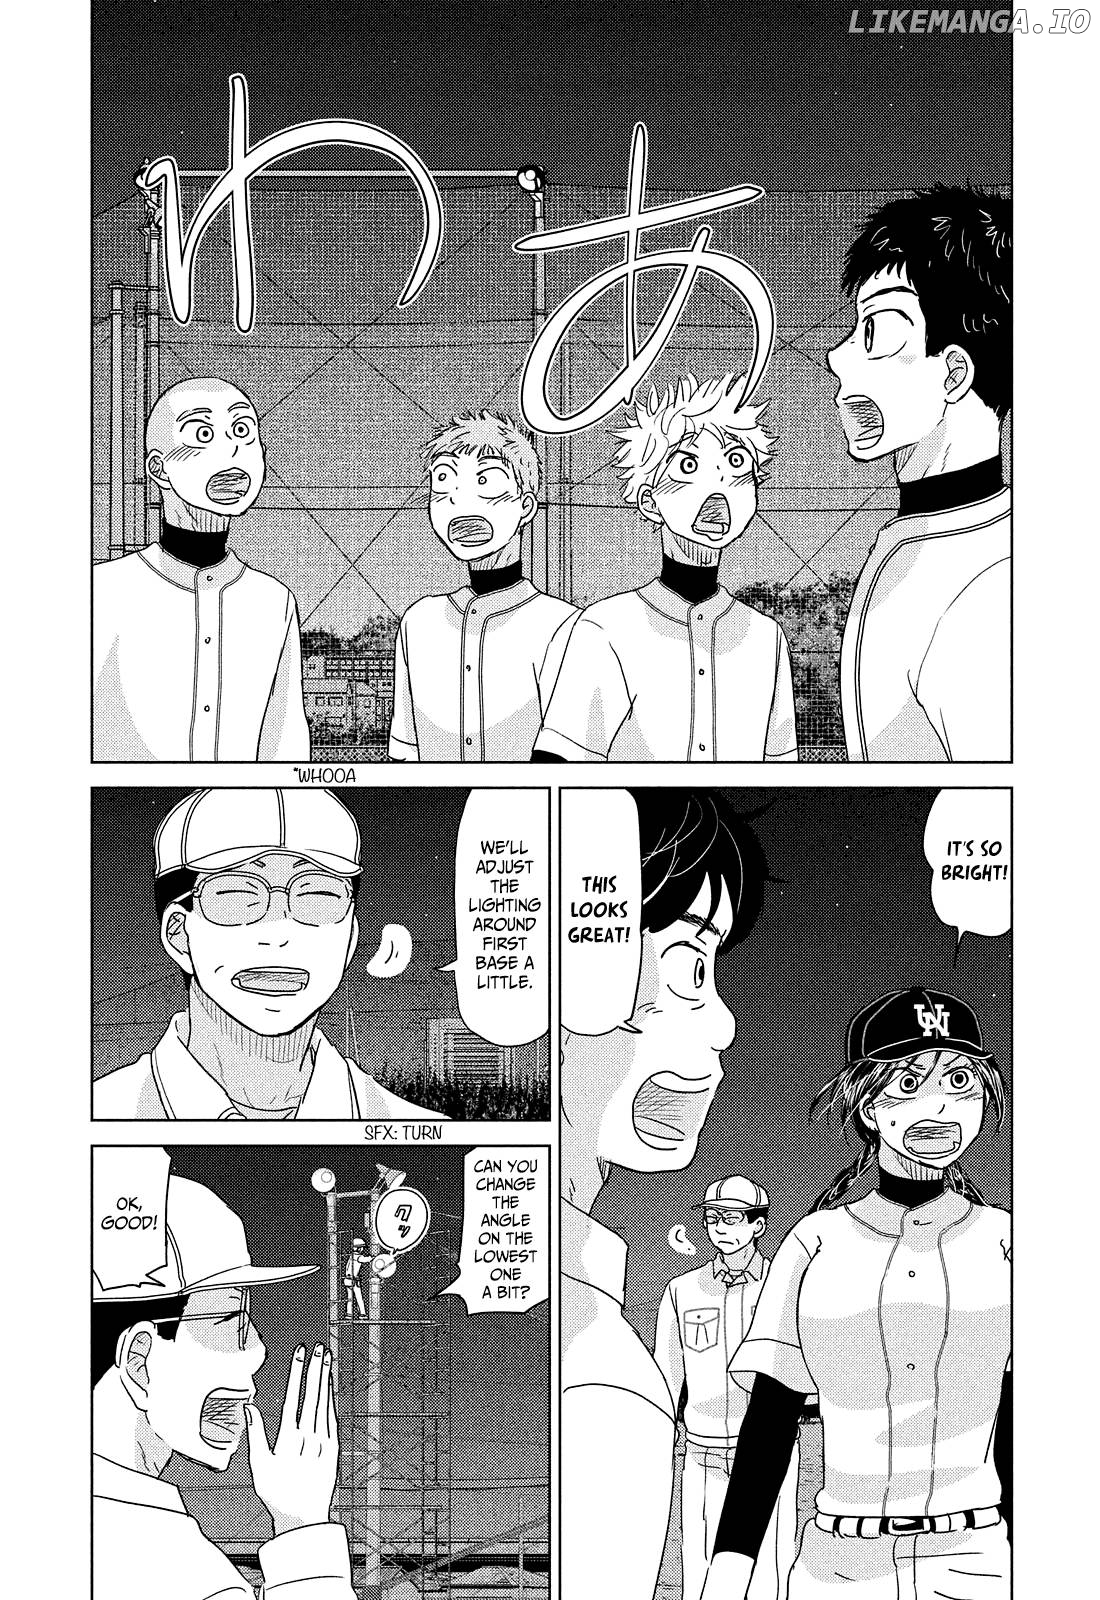 Ookiku Furikabutte Chapter 189 - page 2